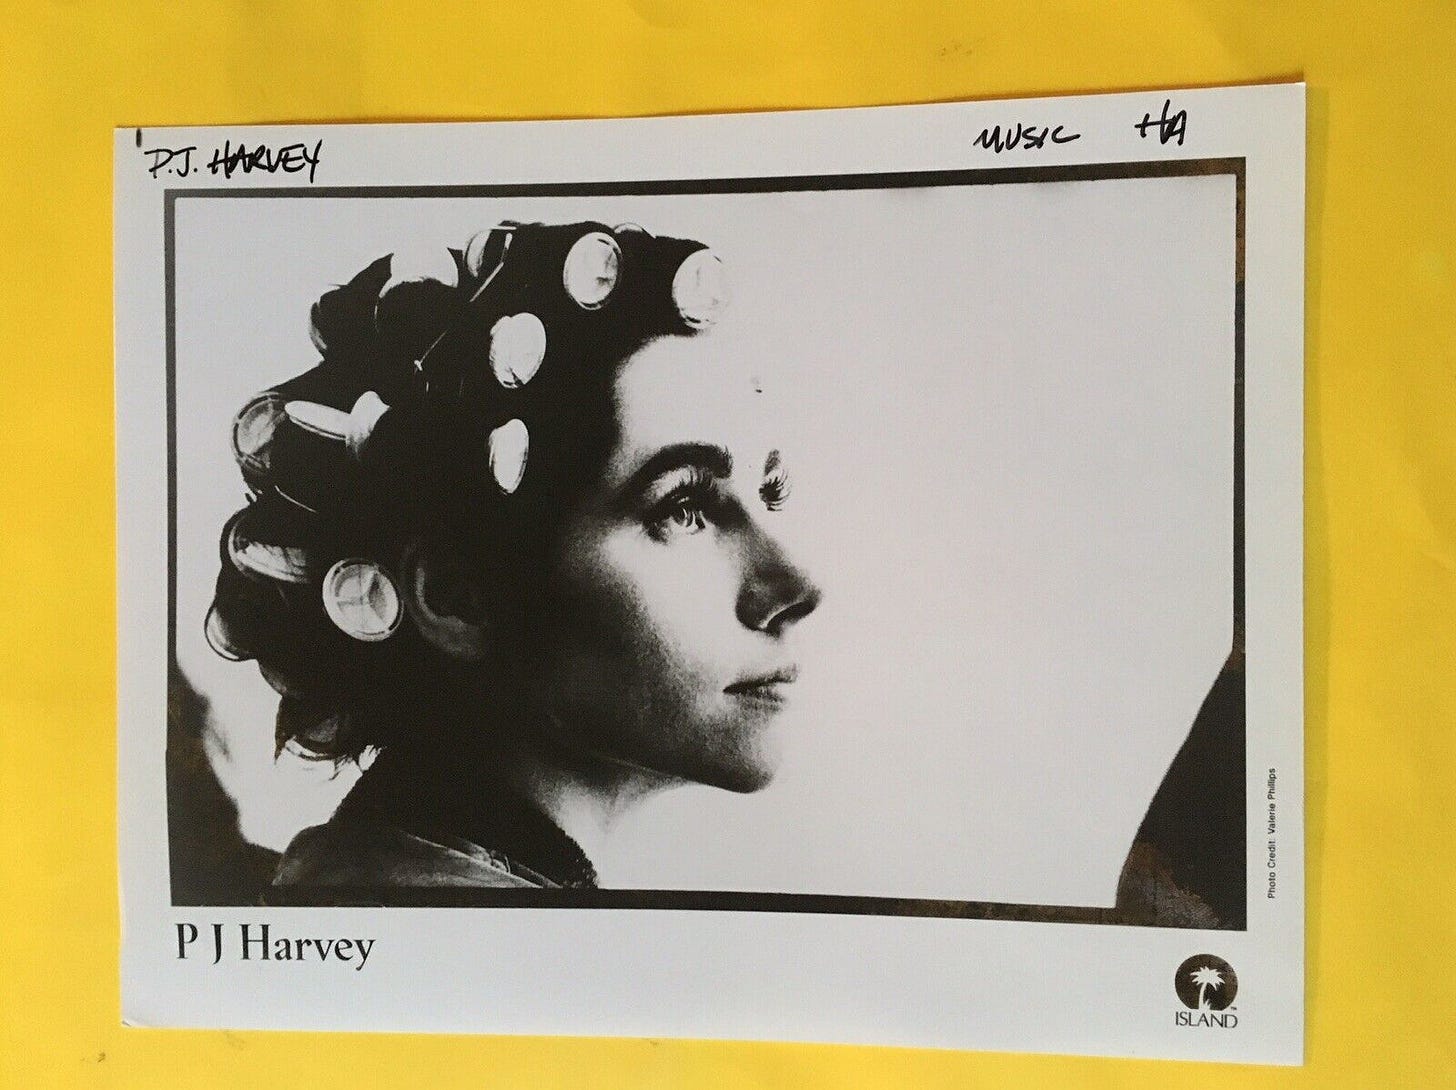 PJ Harvey Press Photo 8x10”, Indigo Records. See Info. - Picture 1 of 4